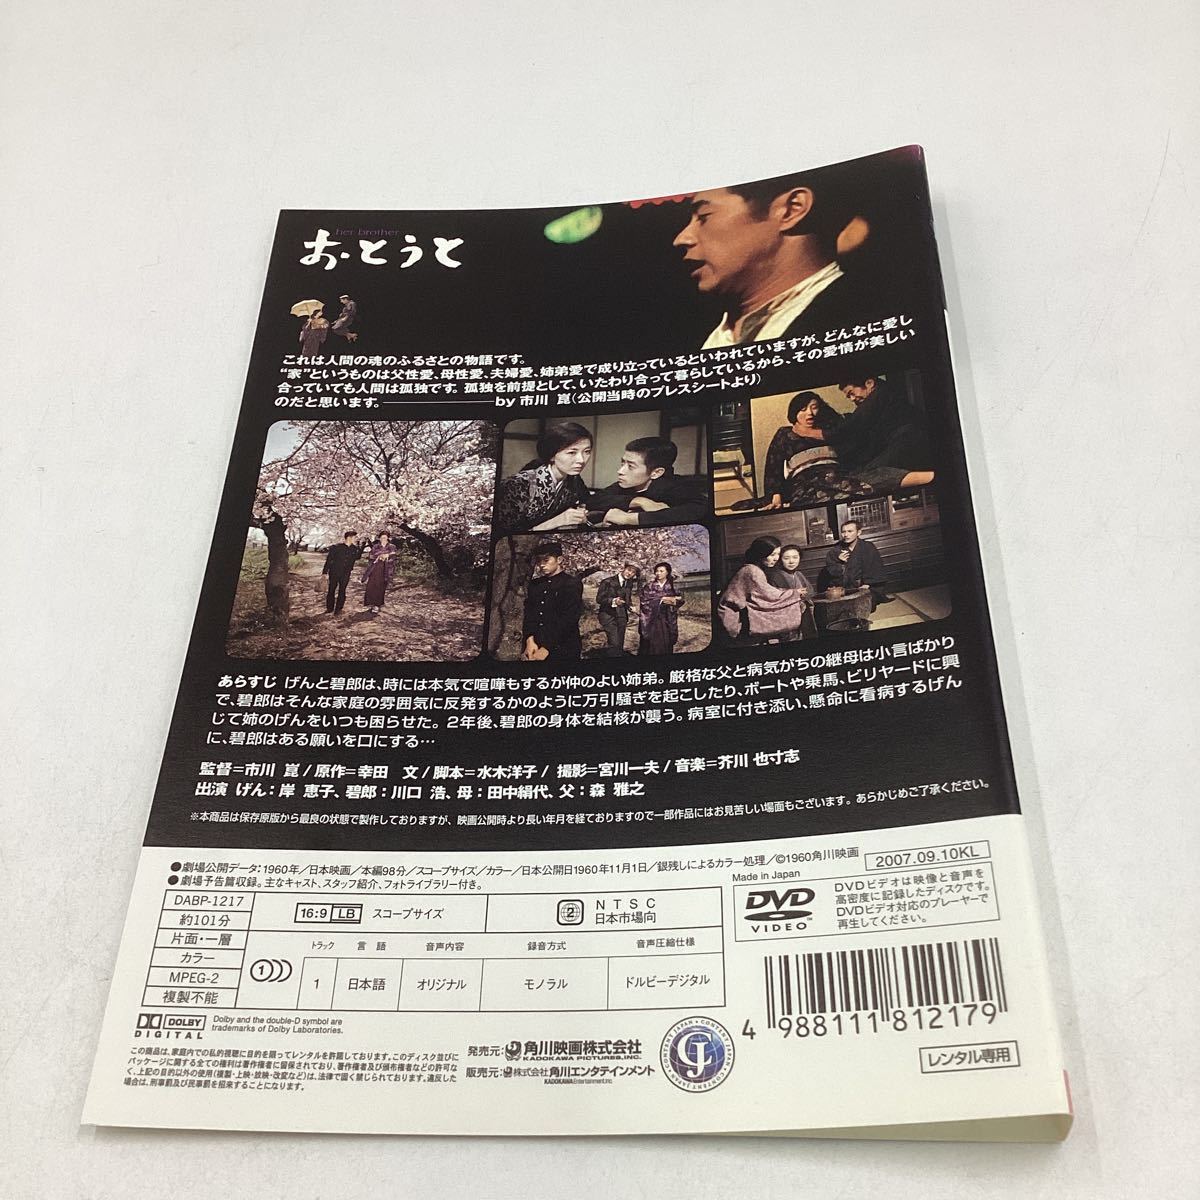 [A13]*DVD*....-..., Kawaguchi .- Ichikawa . постановка произведение * прокат * кейс нет (15281)